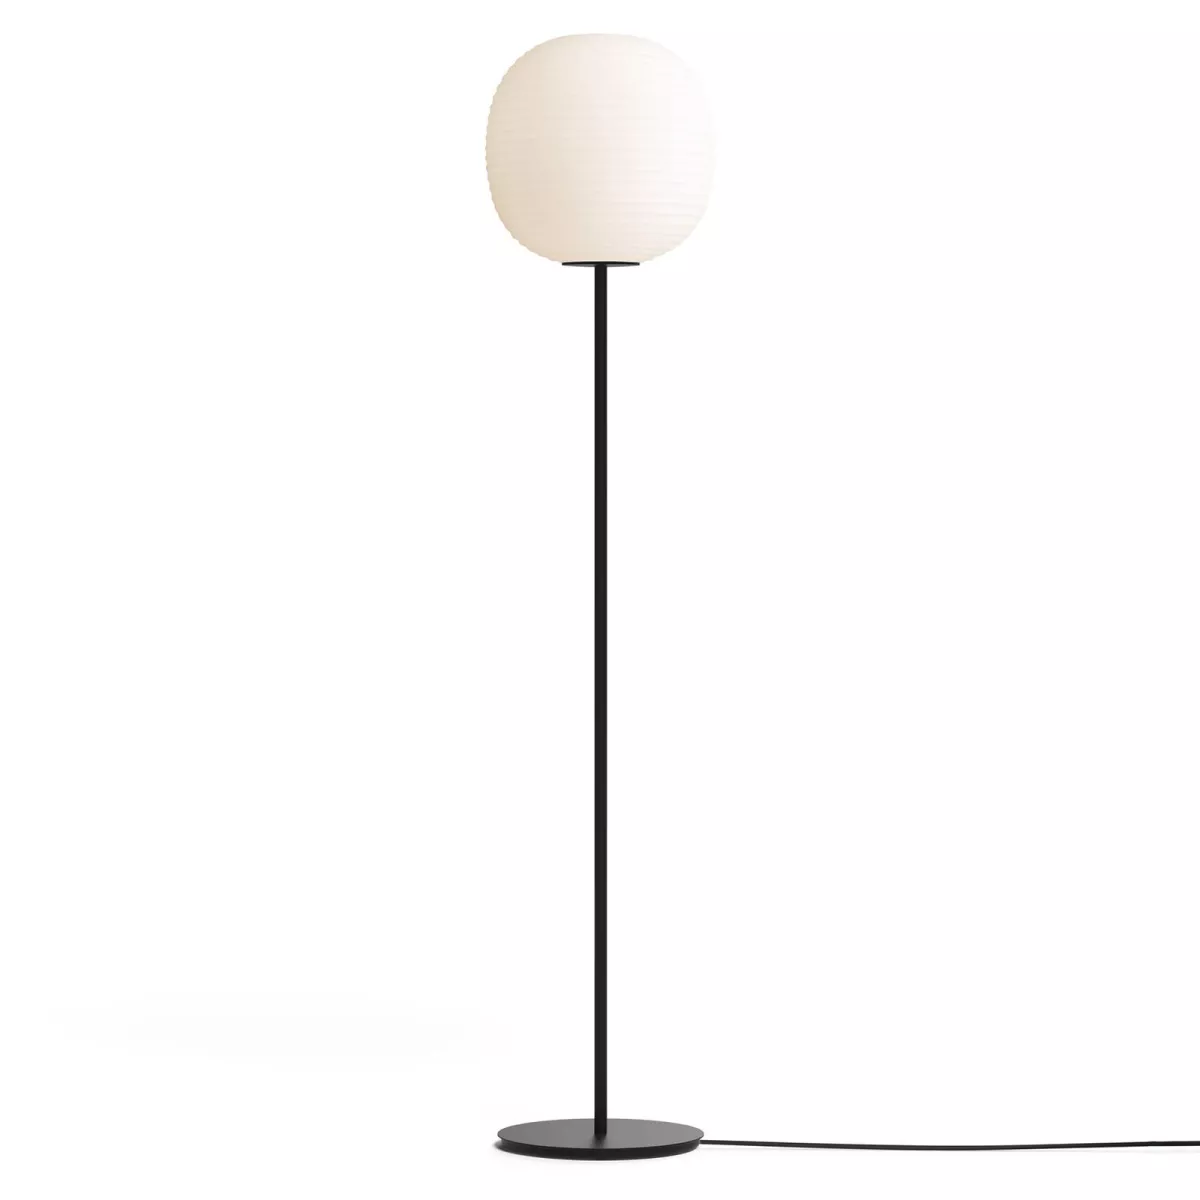 #1 - New Works Lantern Medium gulvlampe, højde 150cm